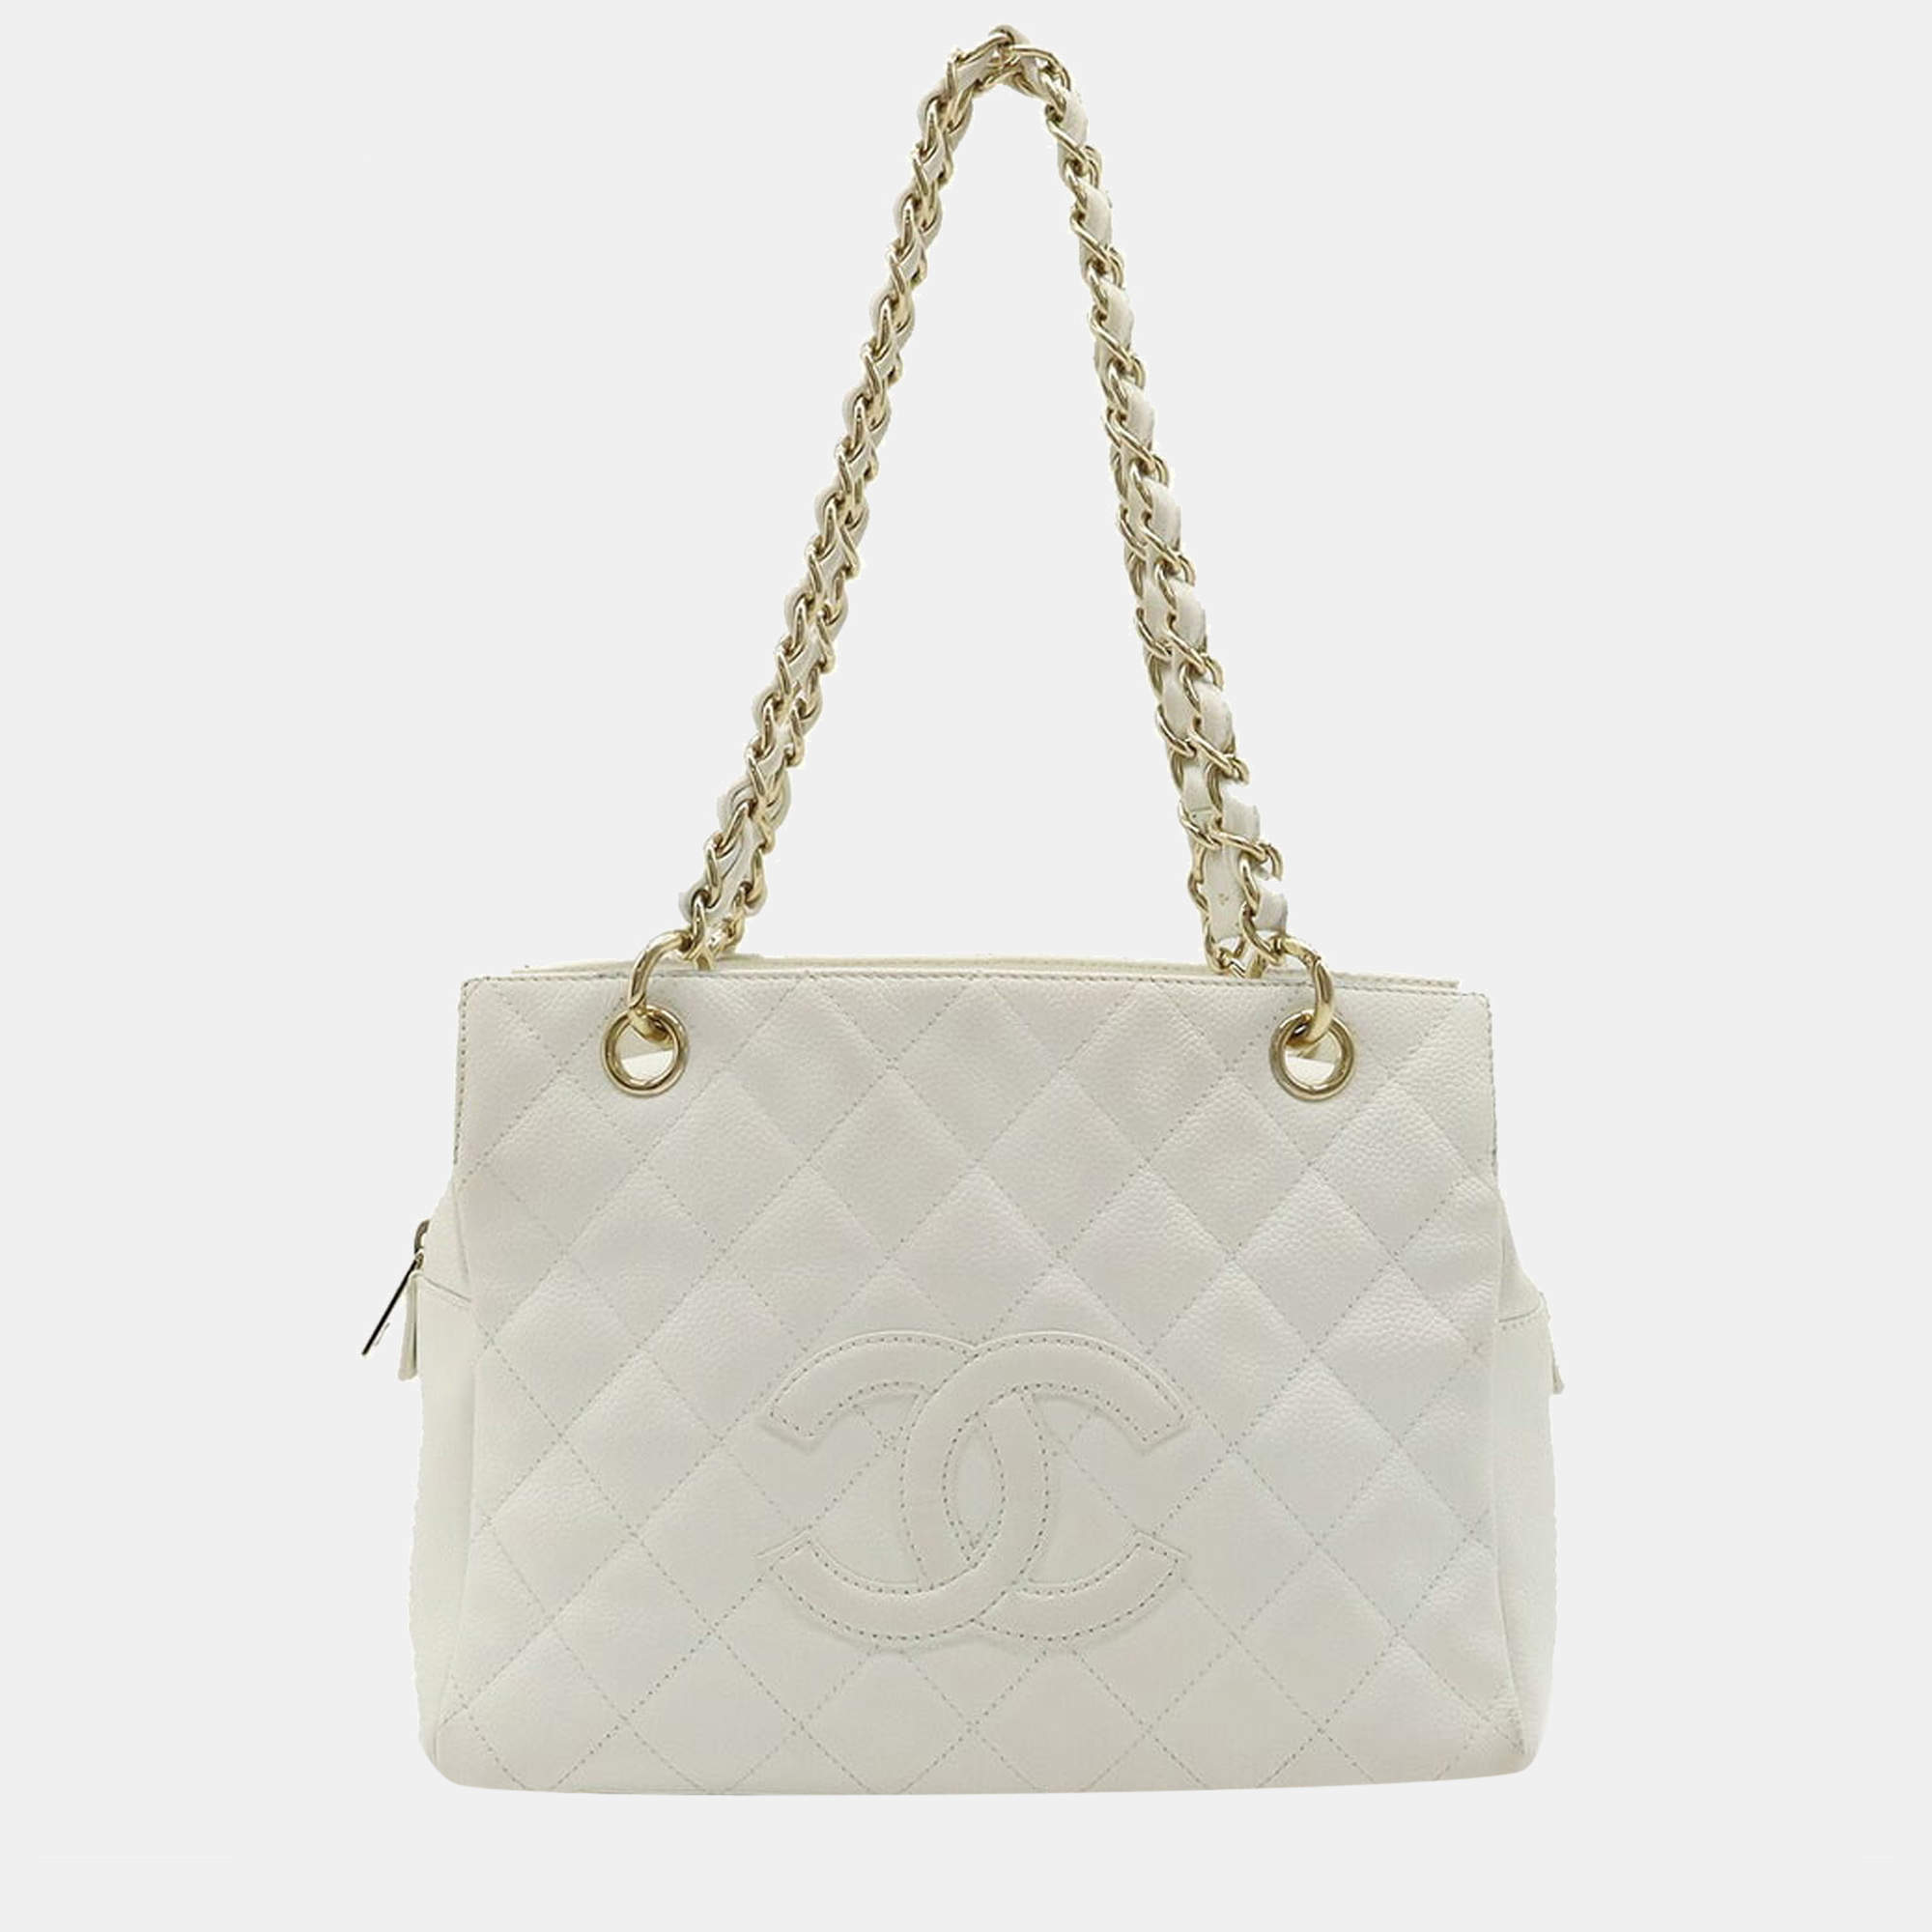 Chanel White Shopping Bag